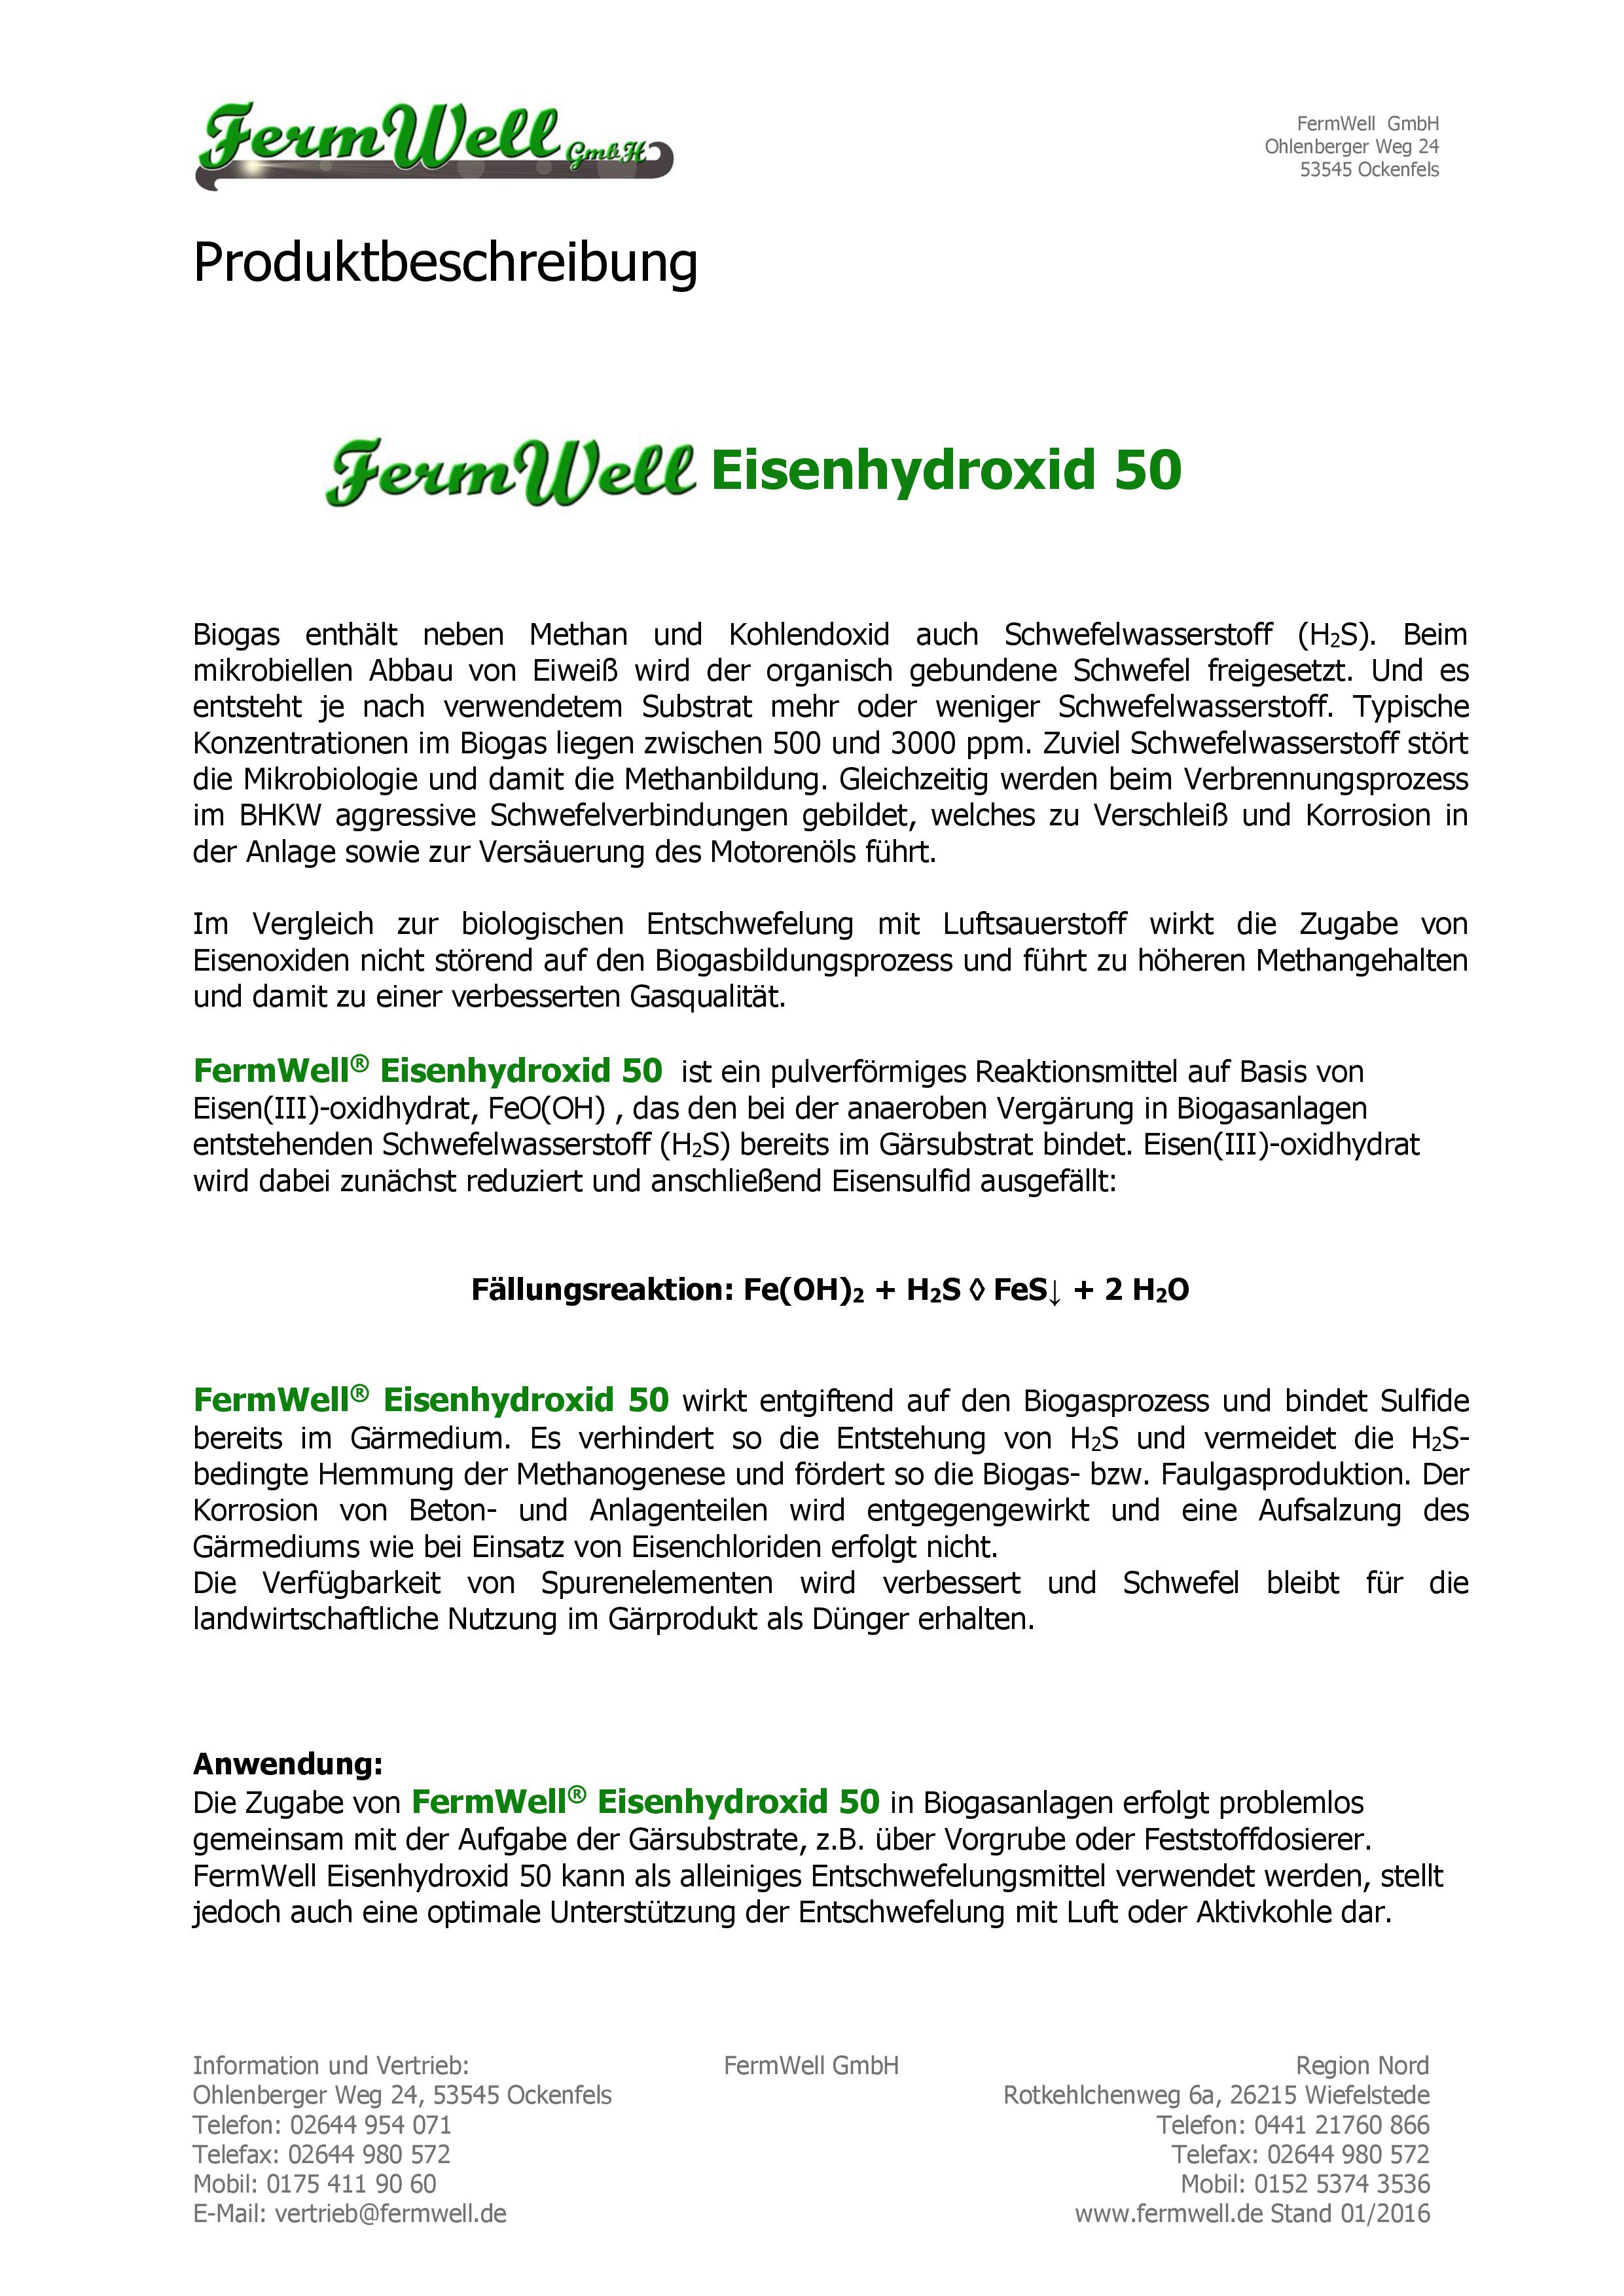 FWG_Eisenhydroxid_50_Produktbeschreib_16